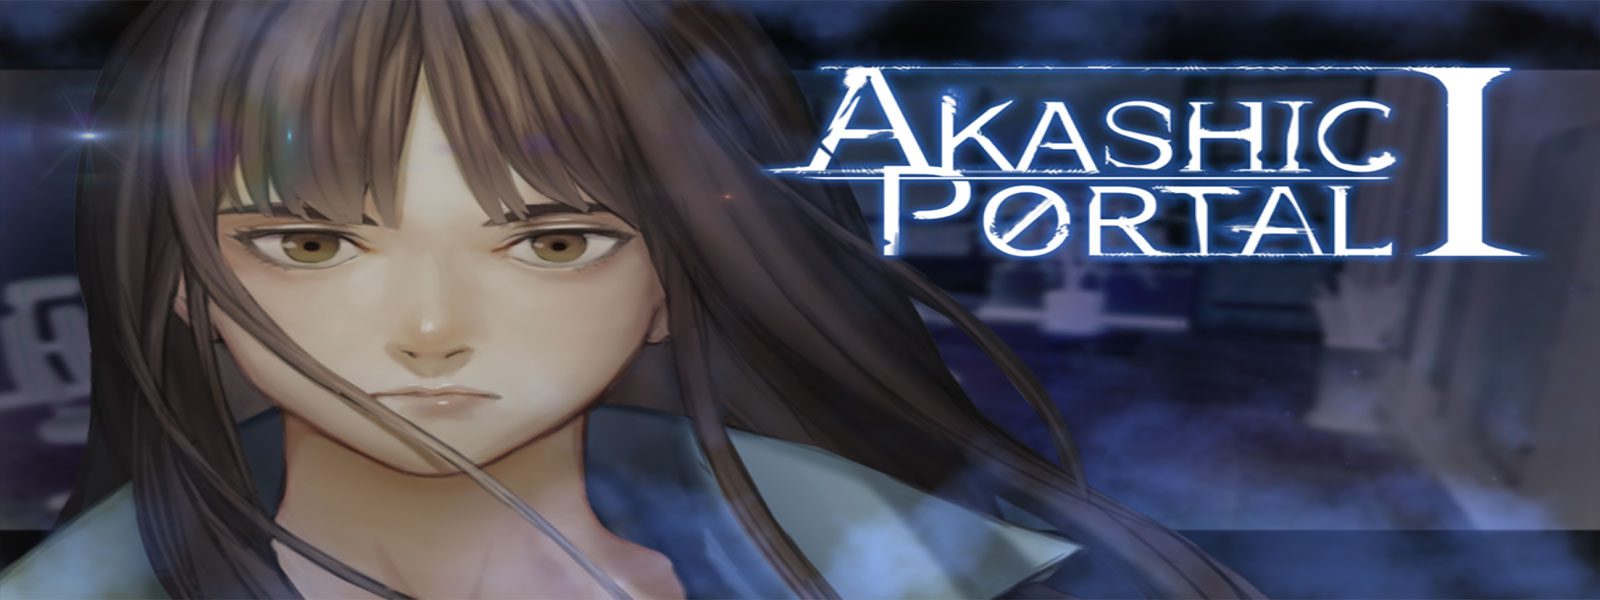 Akashic Portal Cover